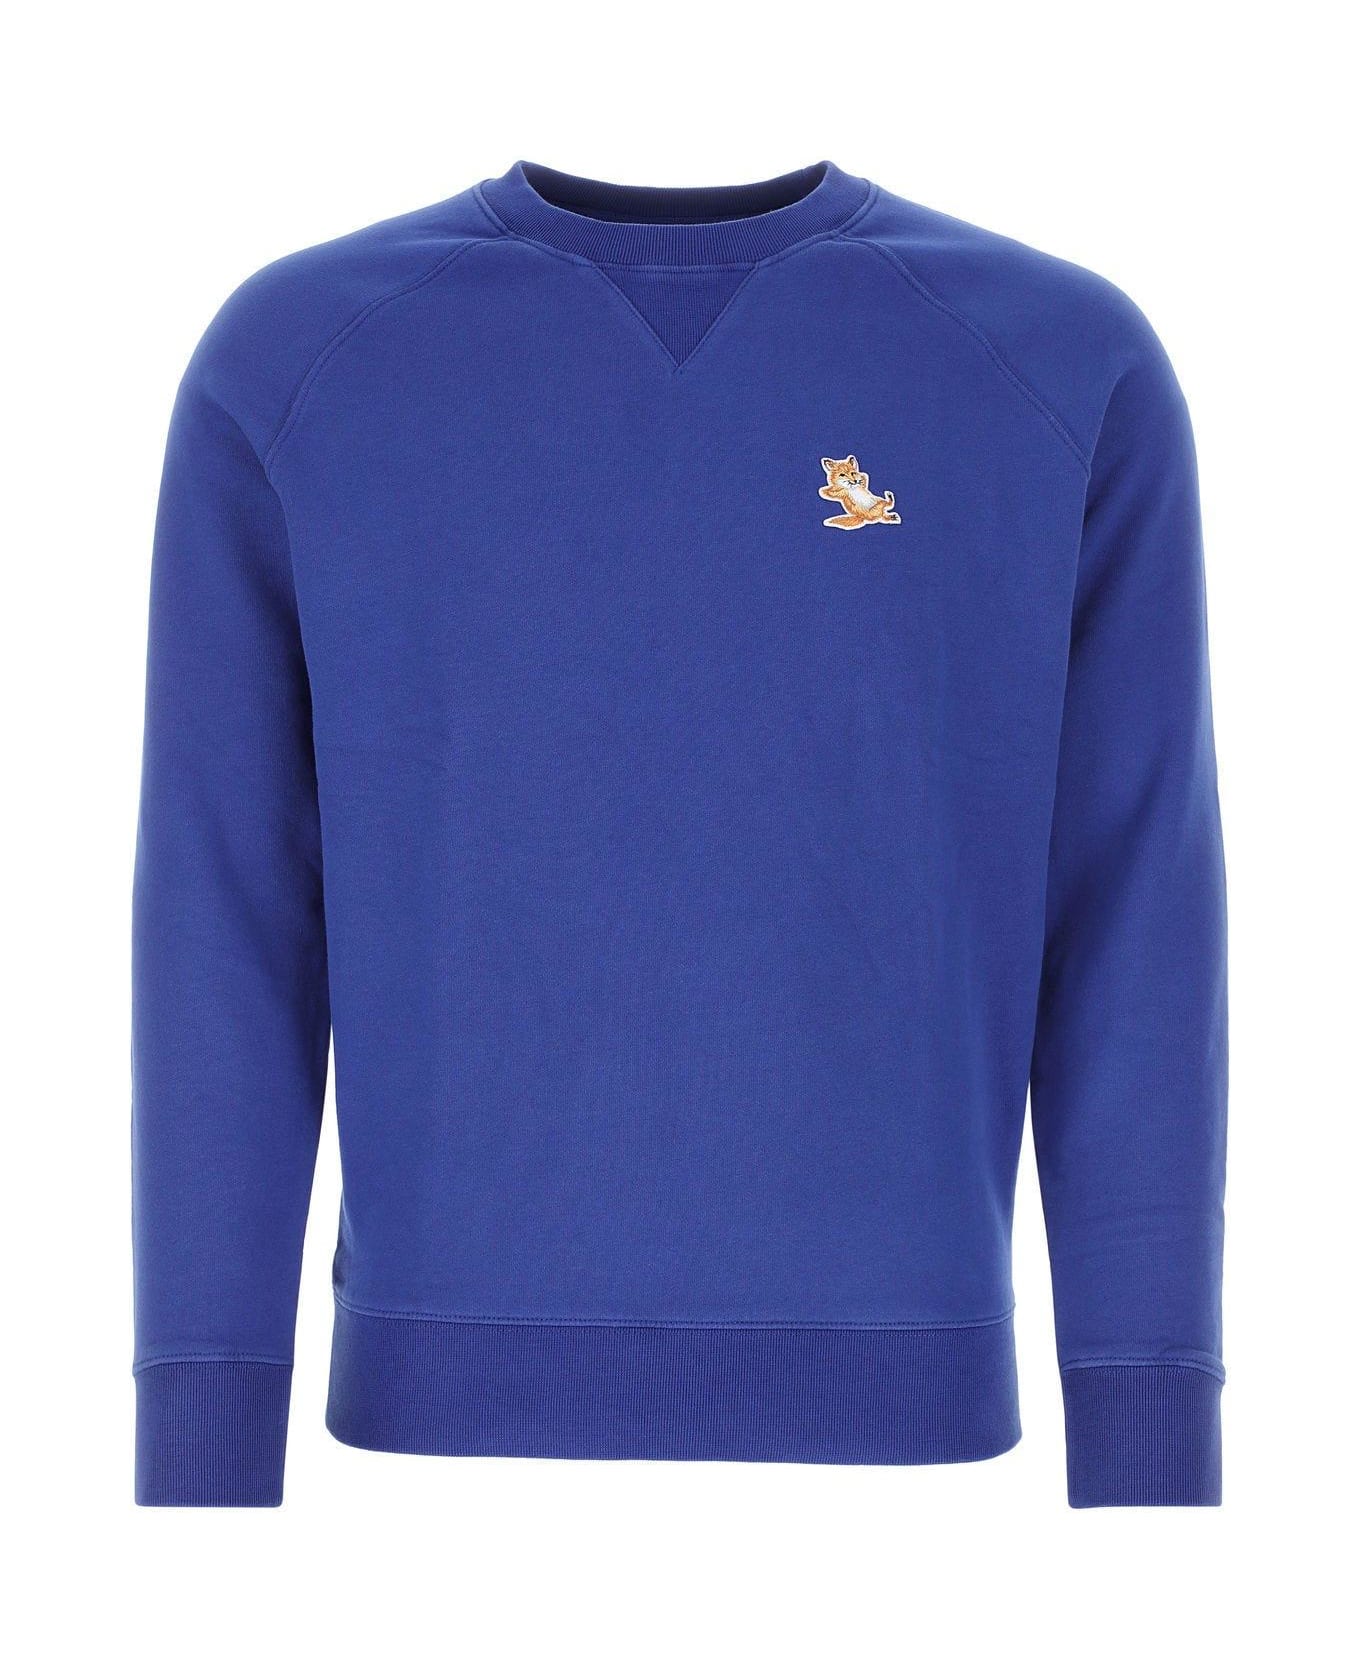 Maison Kitsuné Blue Cotton Sweatshirt - NAVY